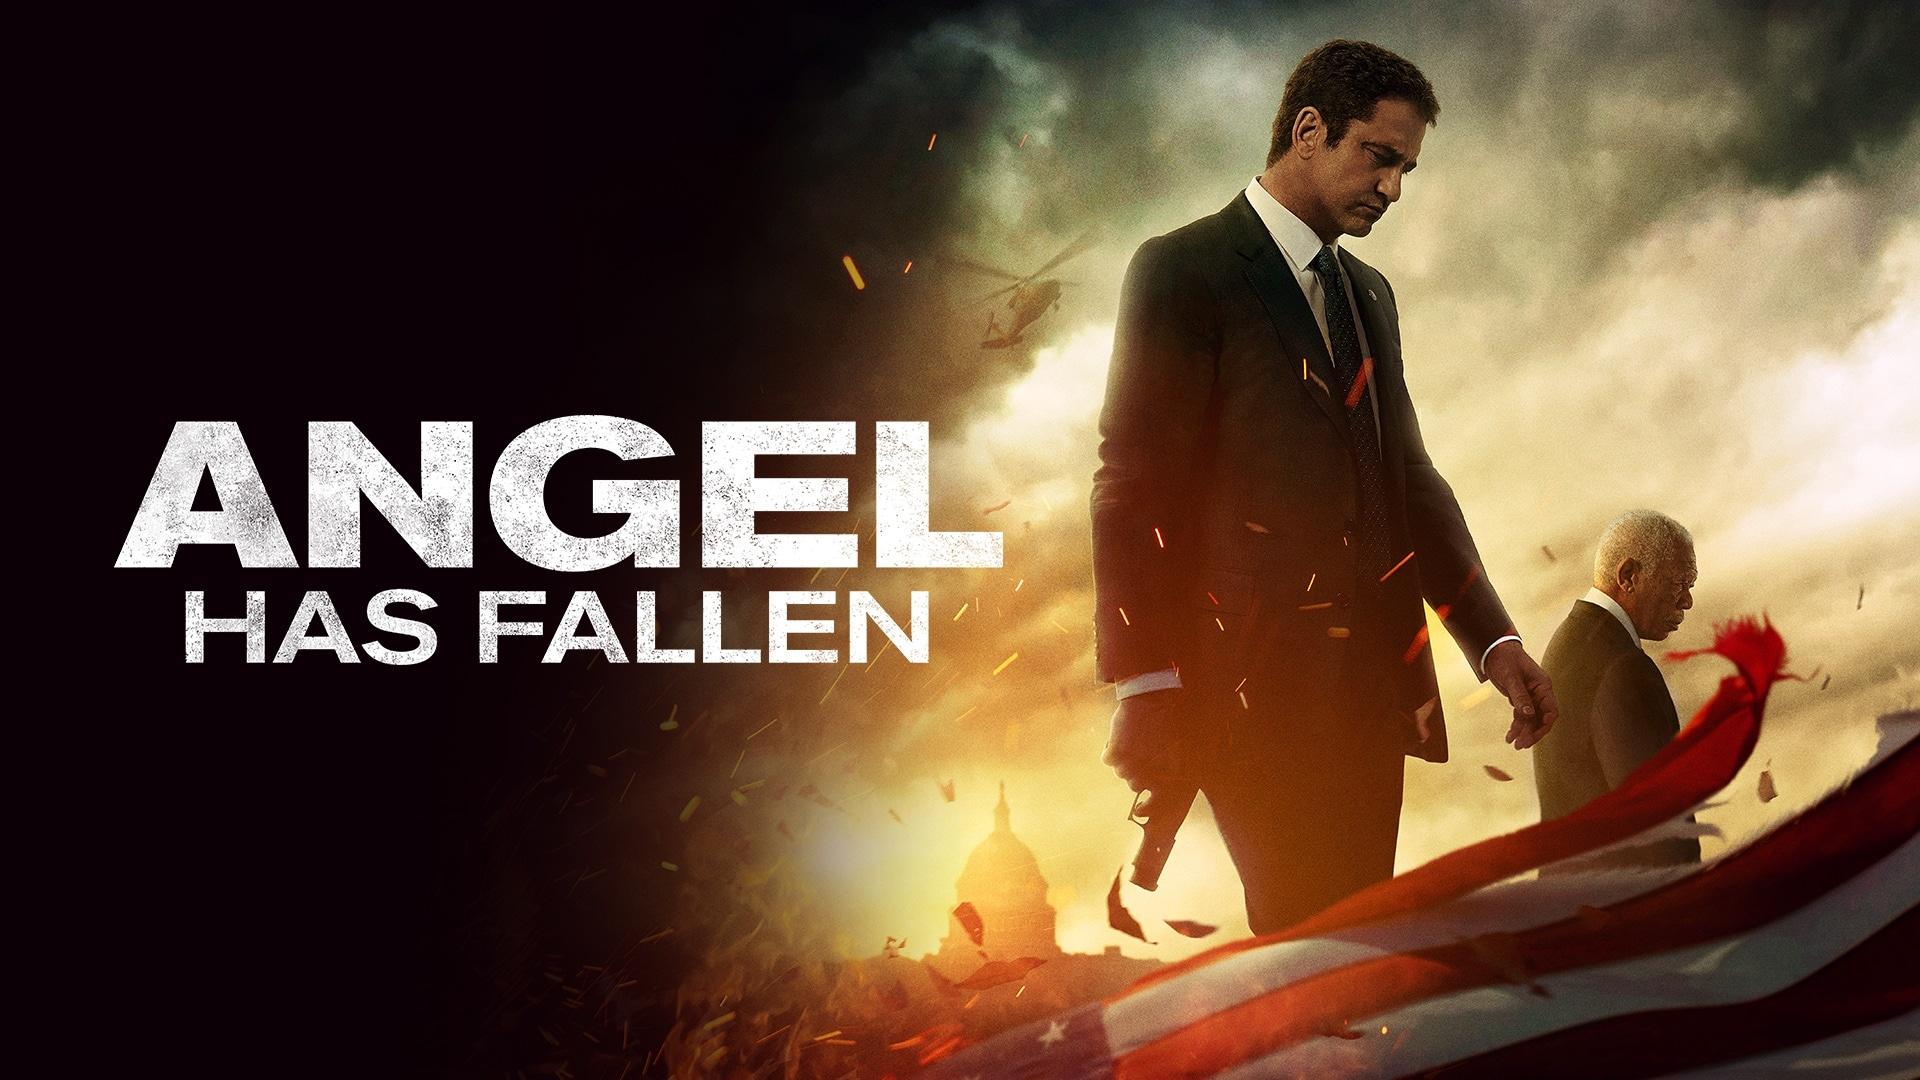 Angel Has Fallen Full Movie Online, Stream or